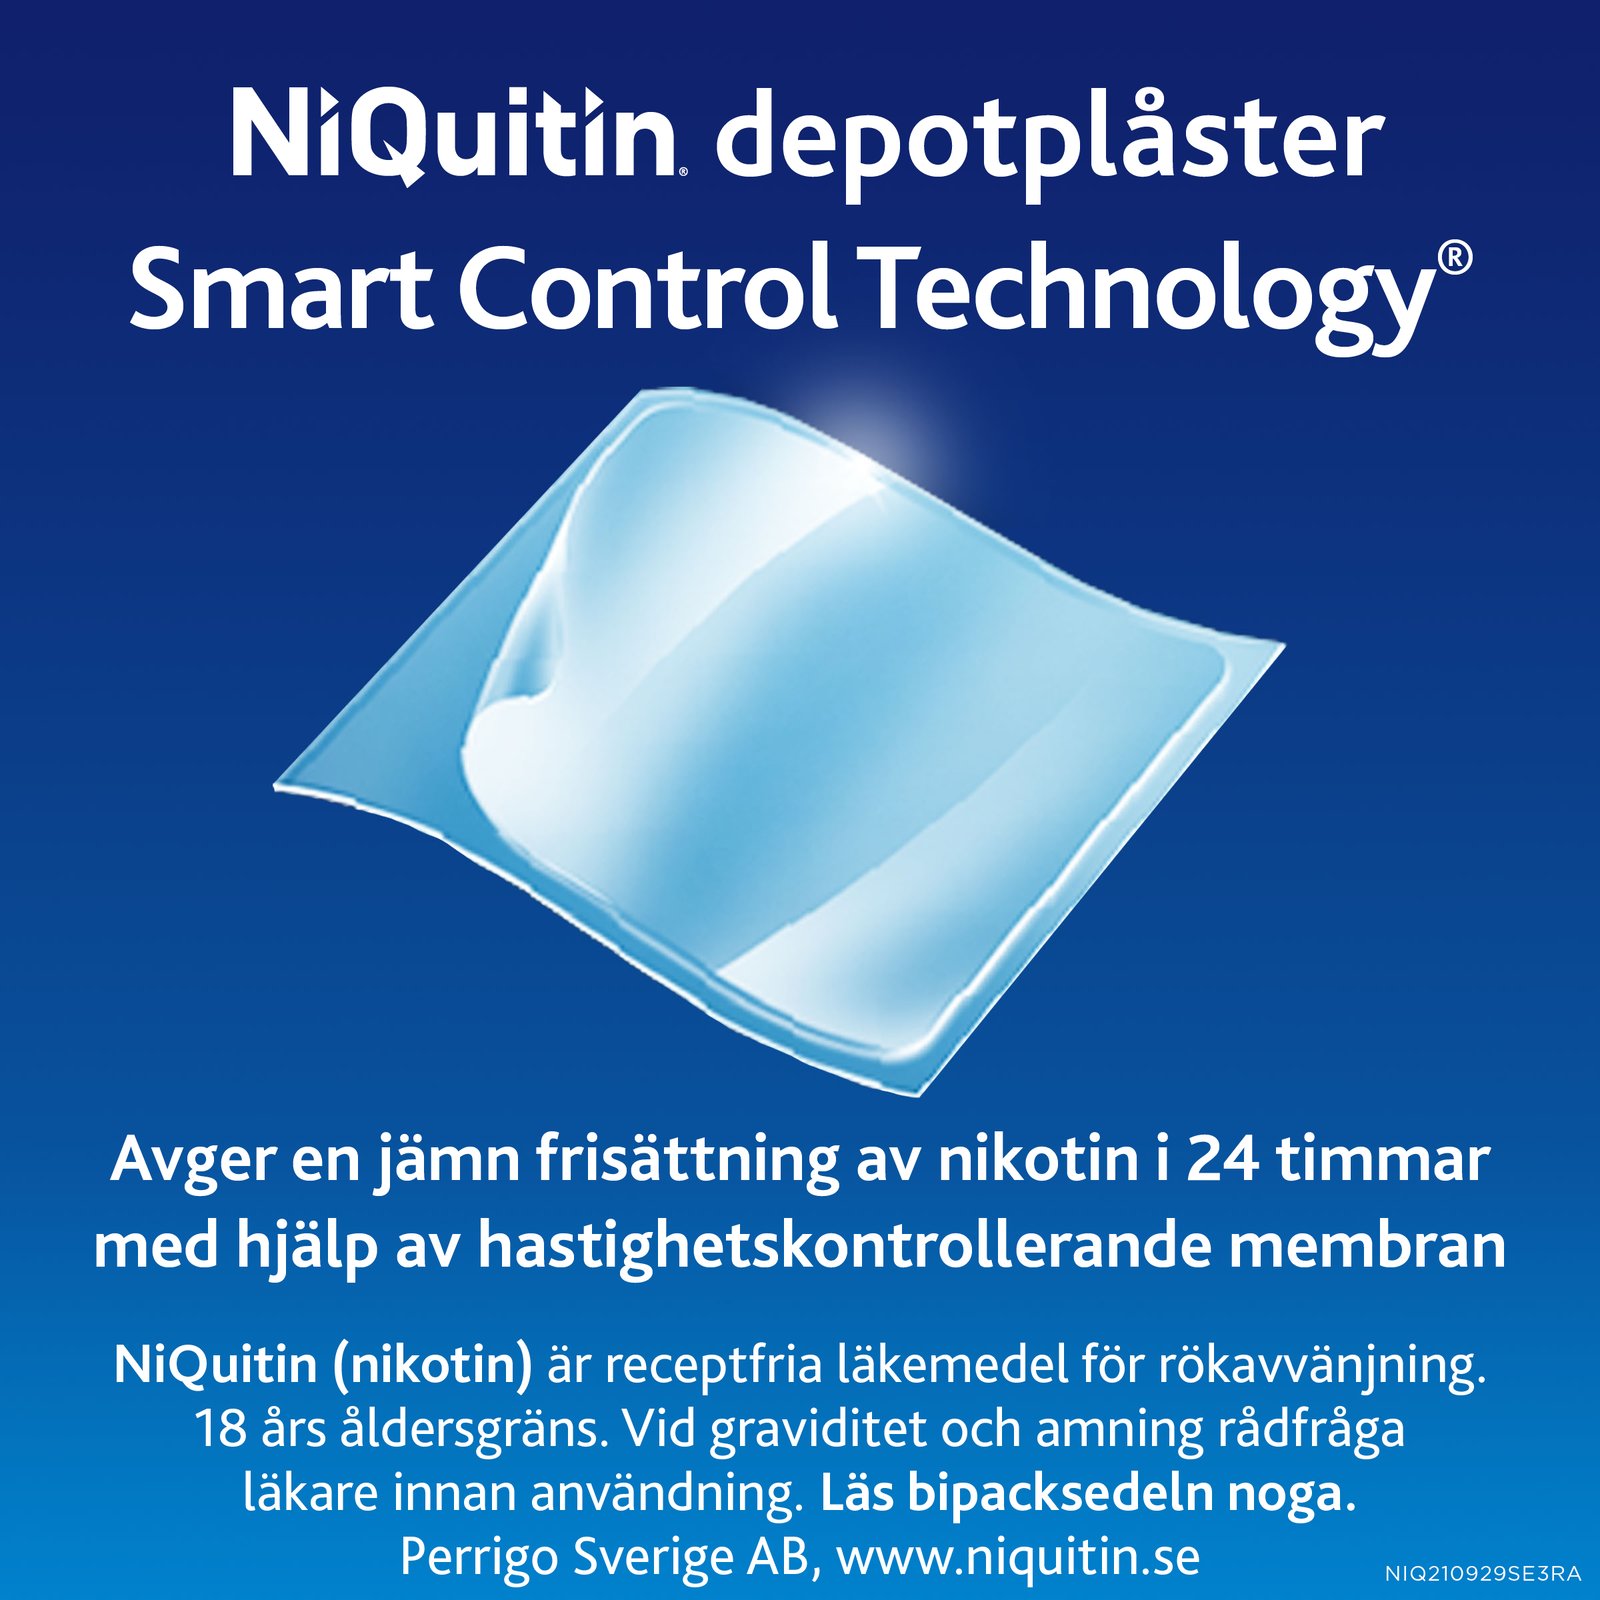 NiQuitin Clear 21 mg/24 timmar Nikotinplåster 14 st